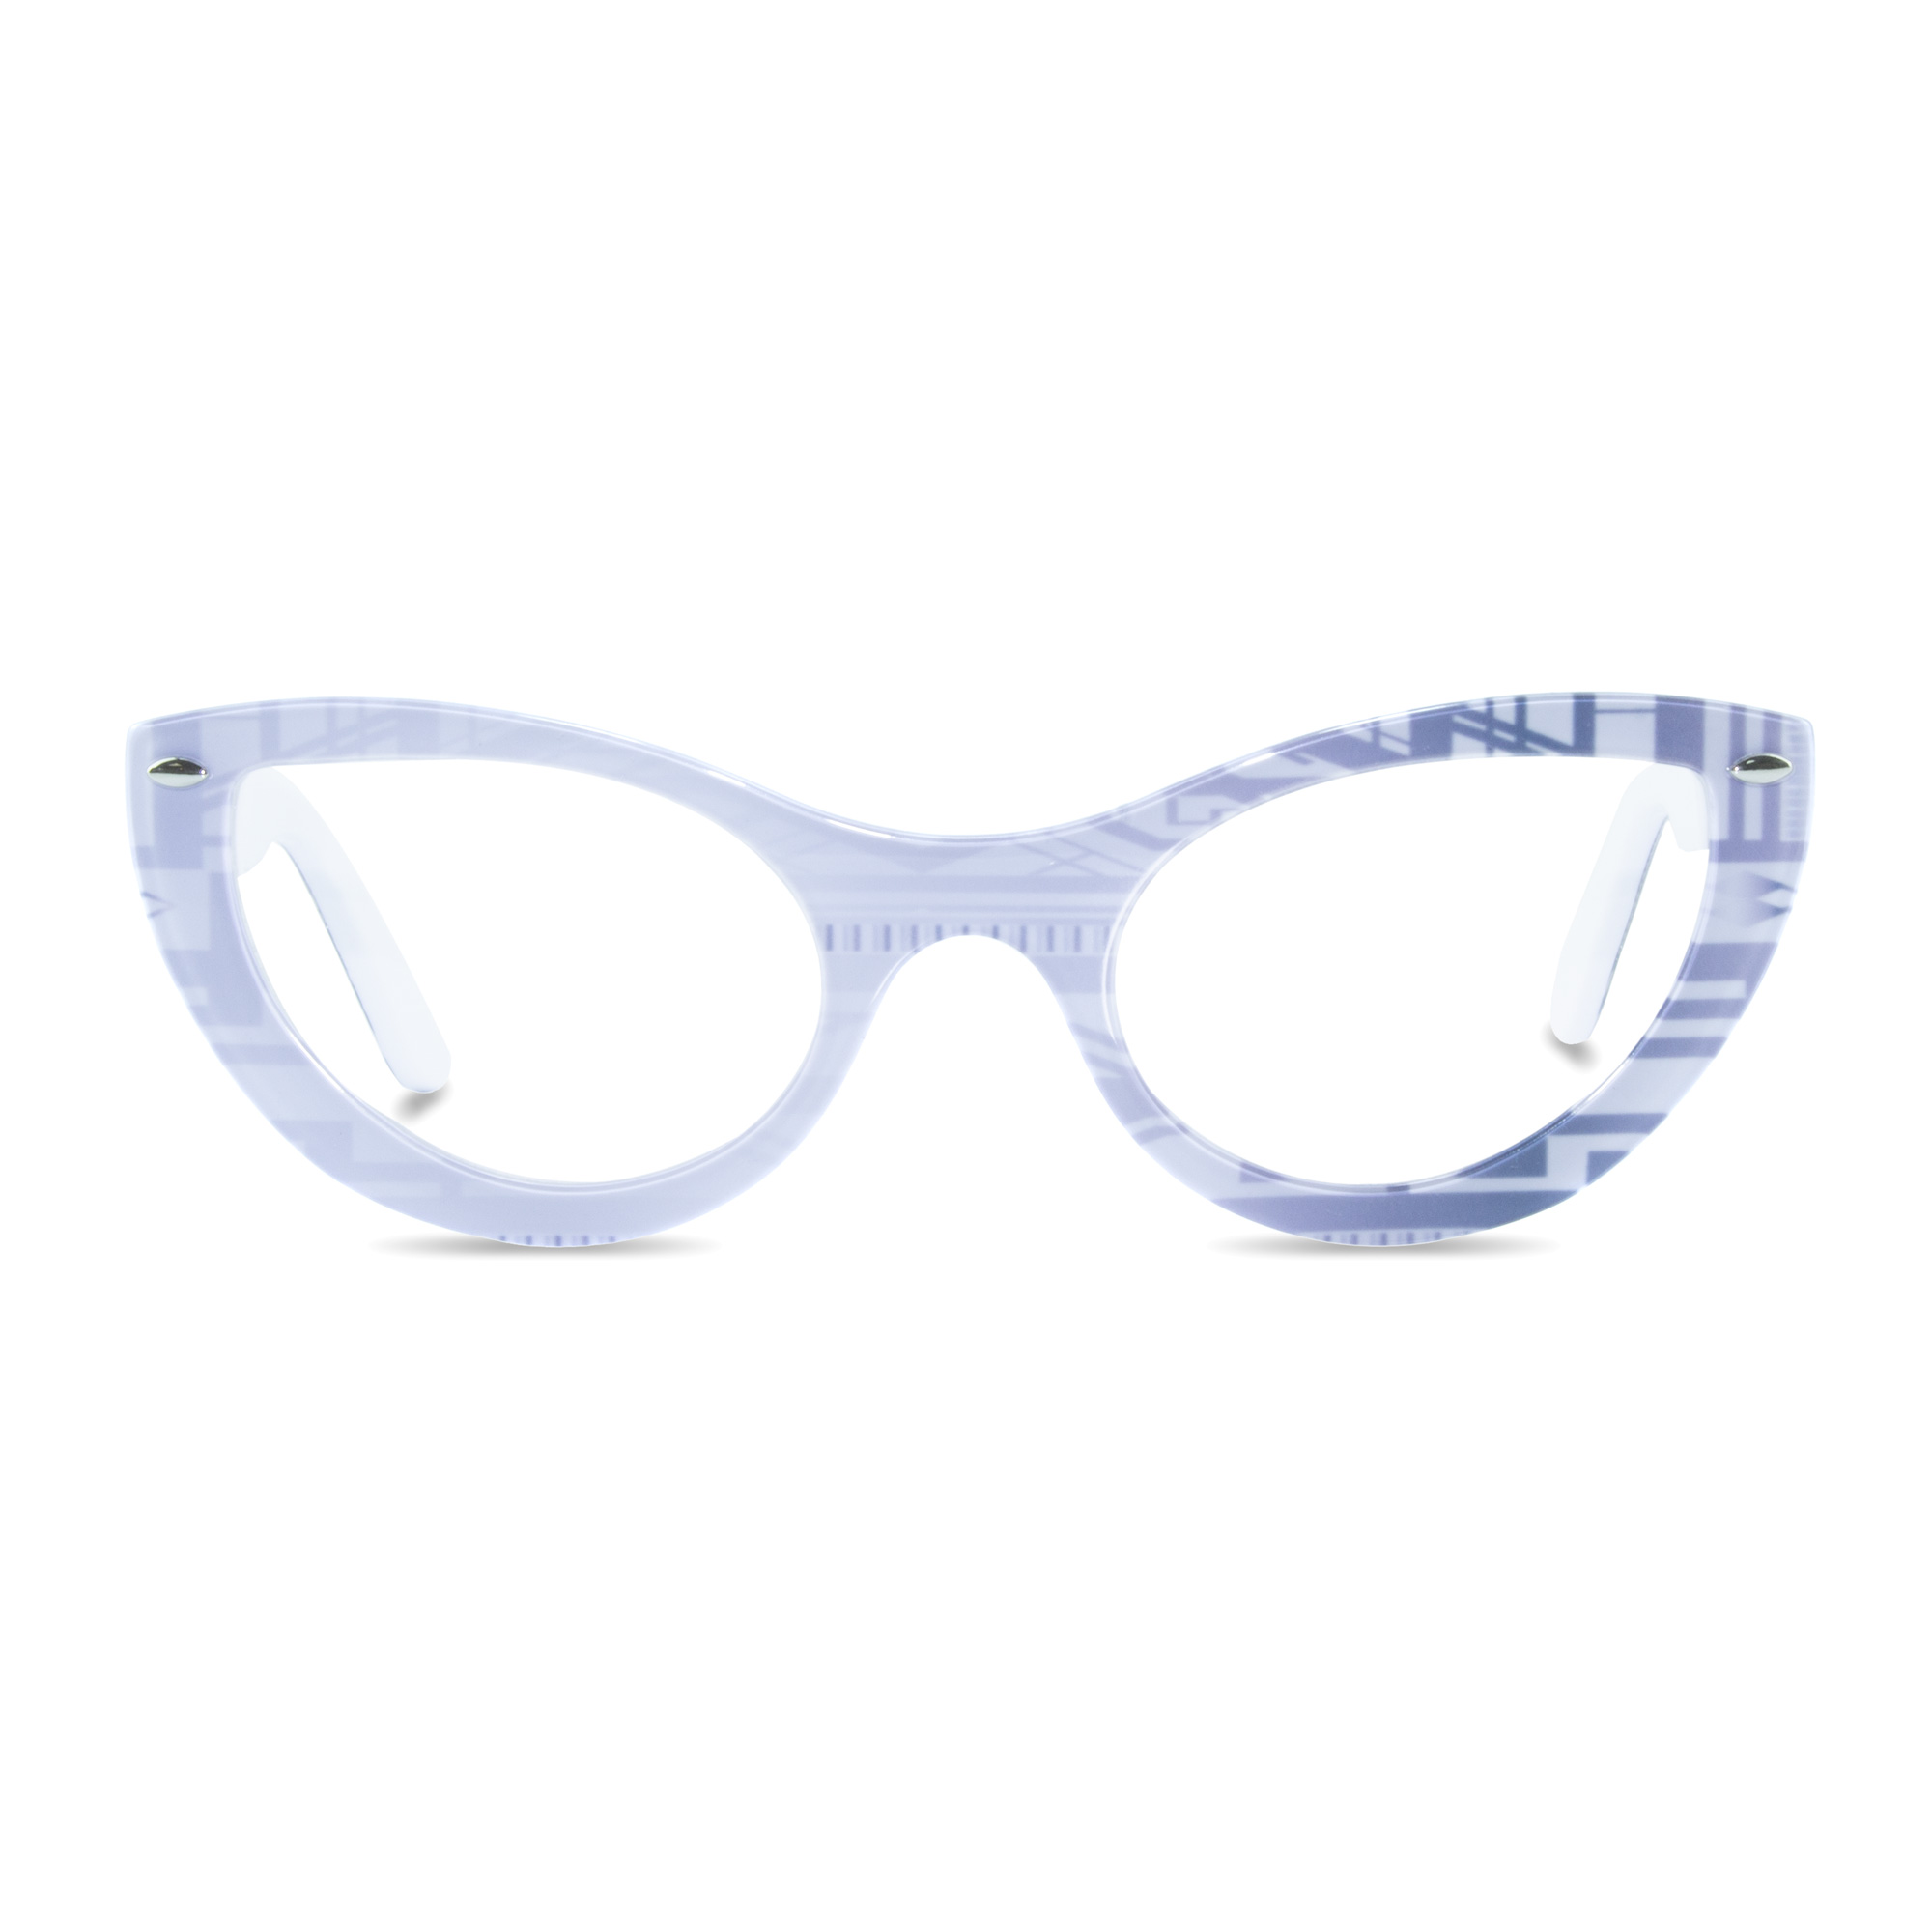 Joiuss gatsby white & silver cat eye glasses